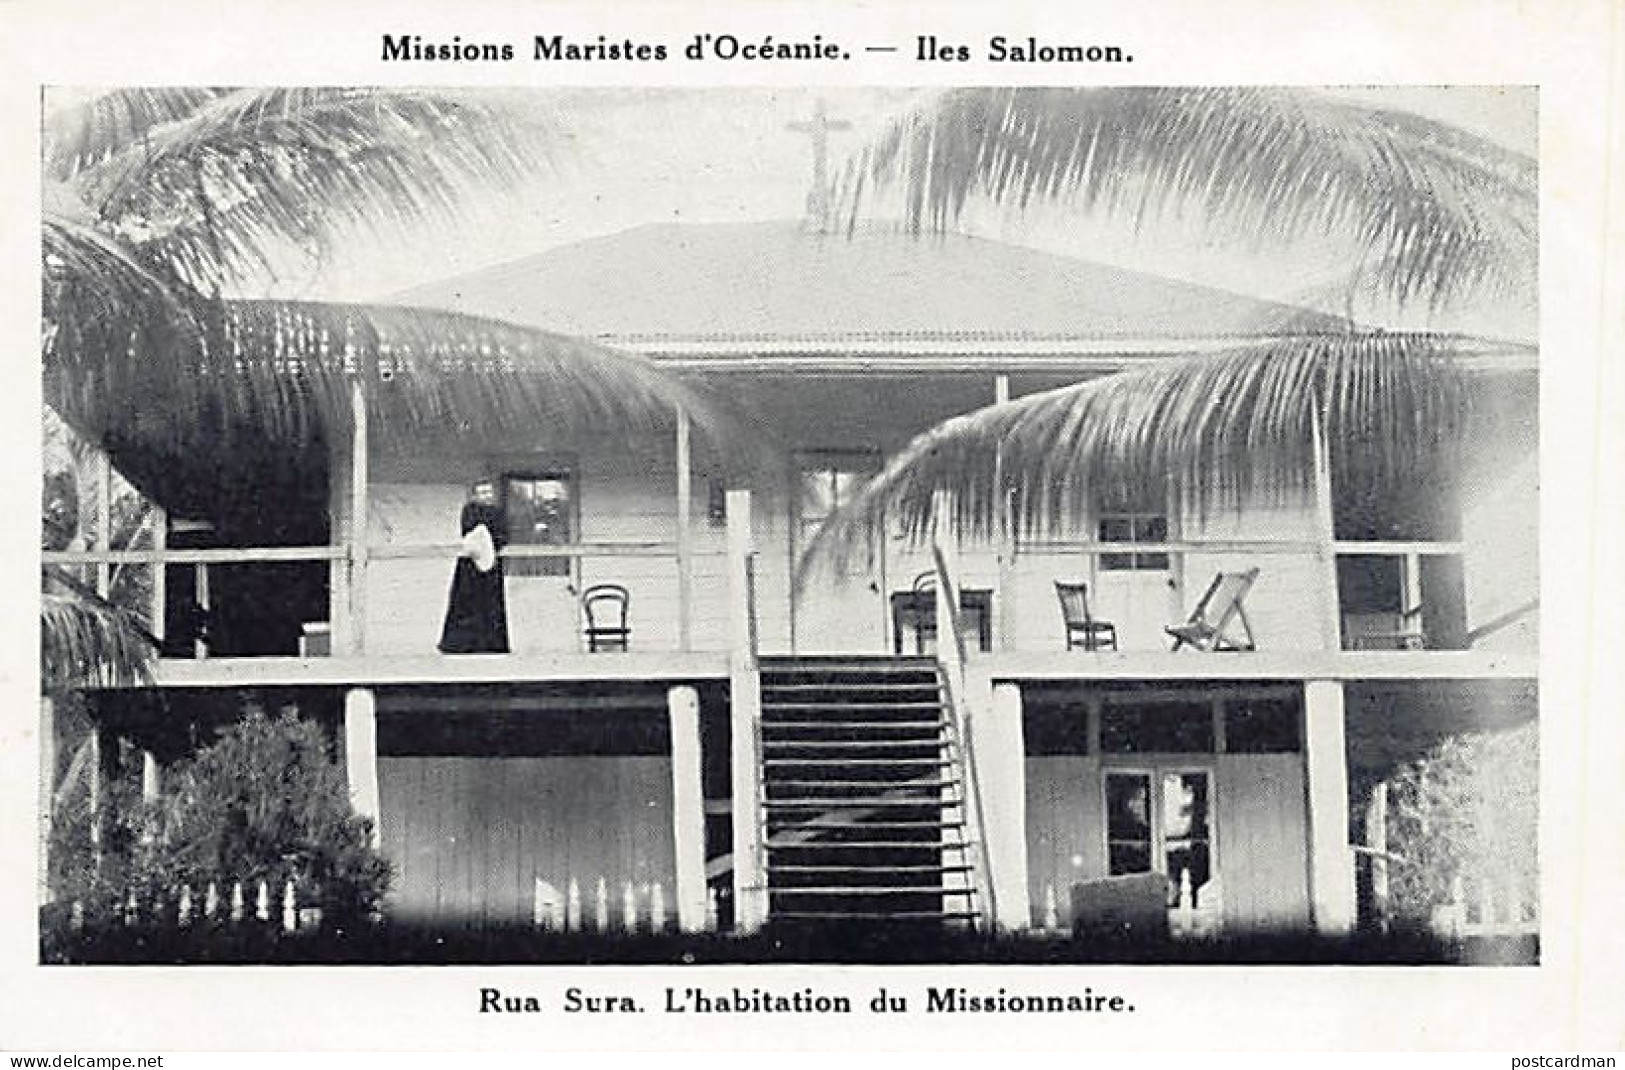 Solomon Islands - Rua Sura Island (off Aola Bay, Guadalcanal) - The Missionary's Dwelling - Publ. Missions Maristes D'Oc - Salomoninseln